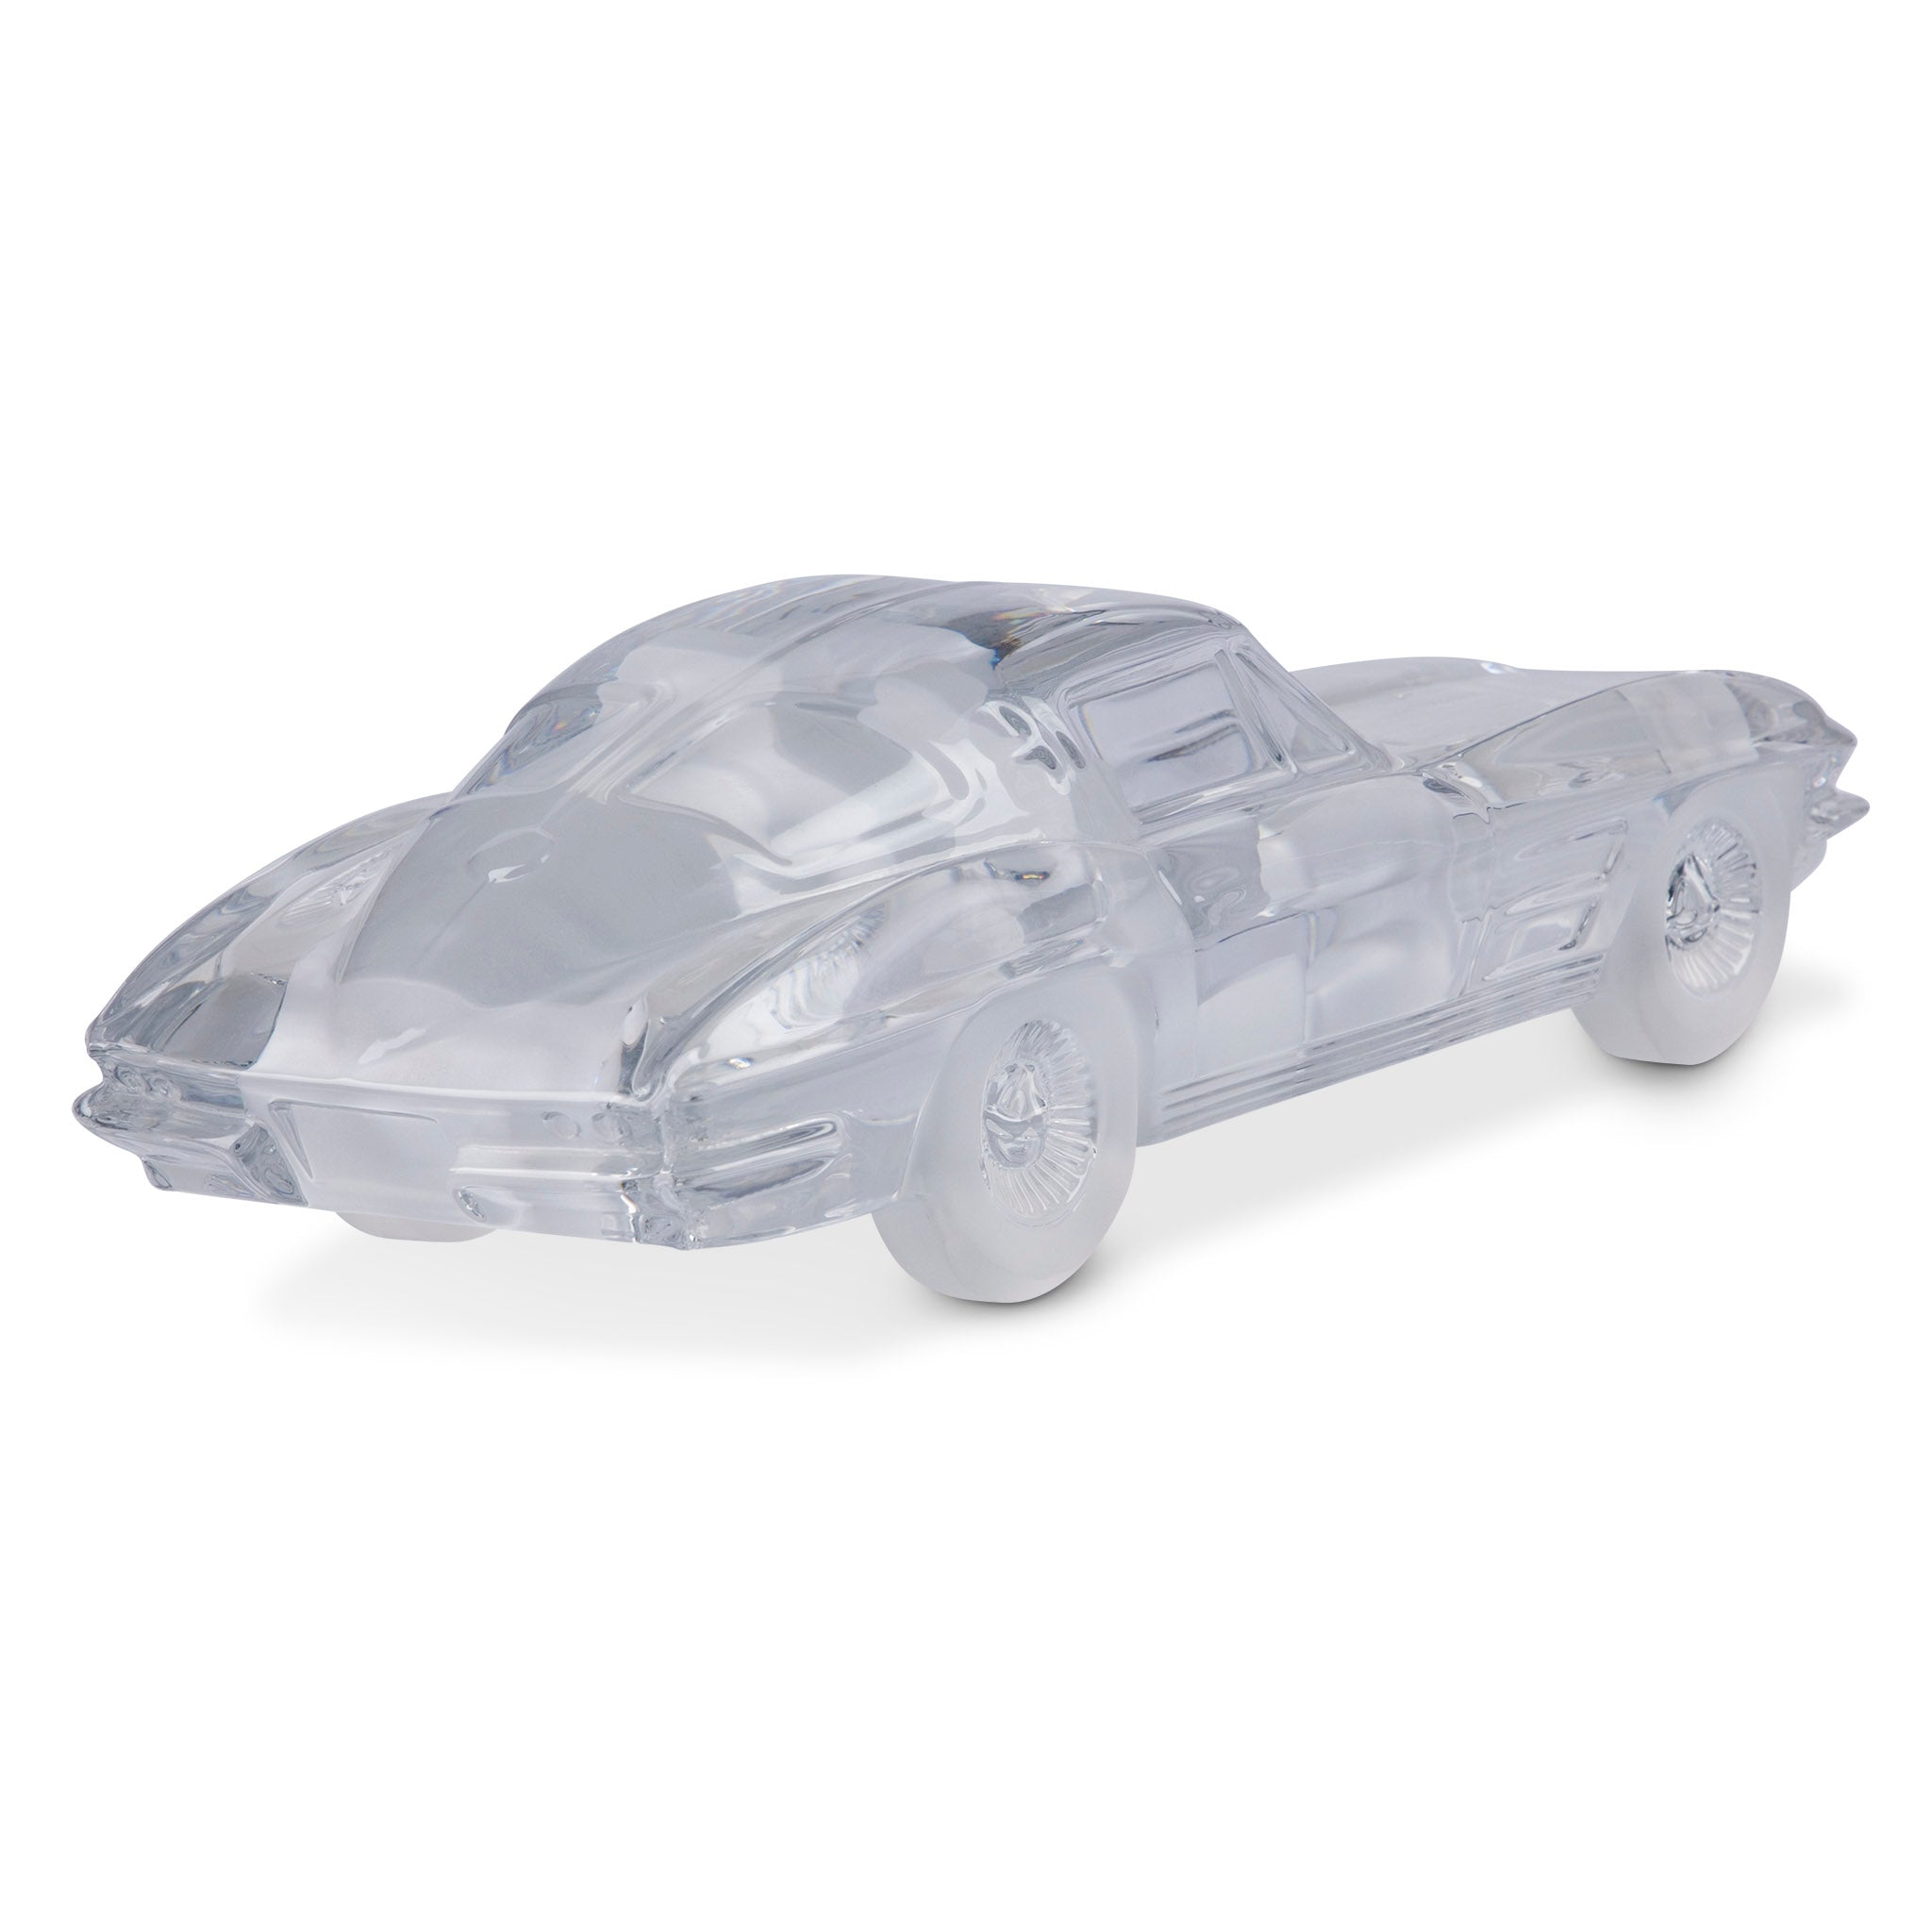 Daum Crystal Corvette Stingray Car Model